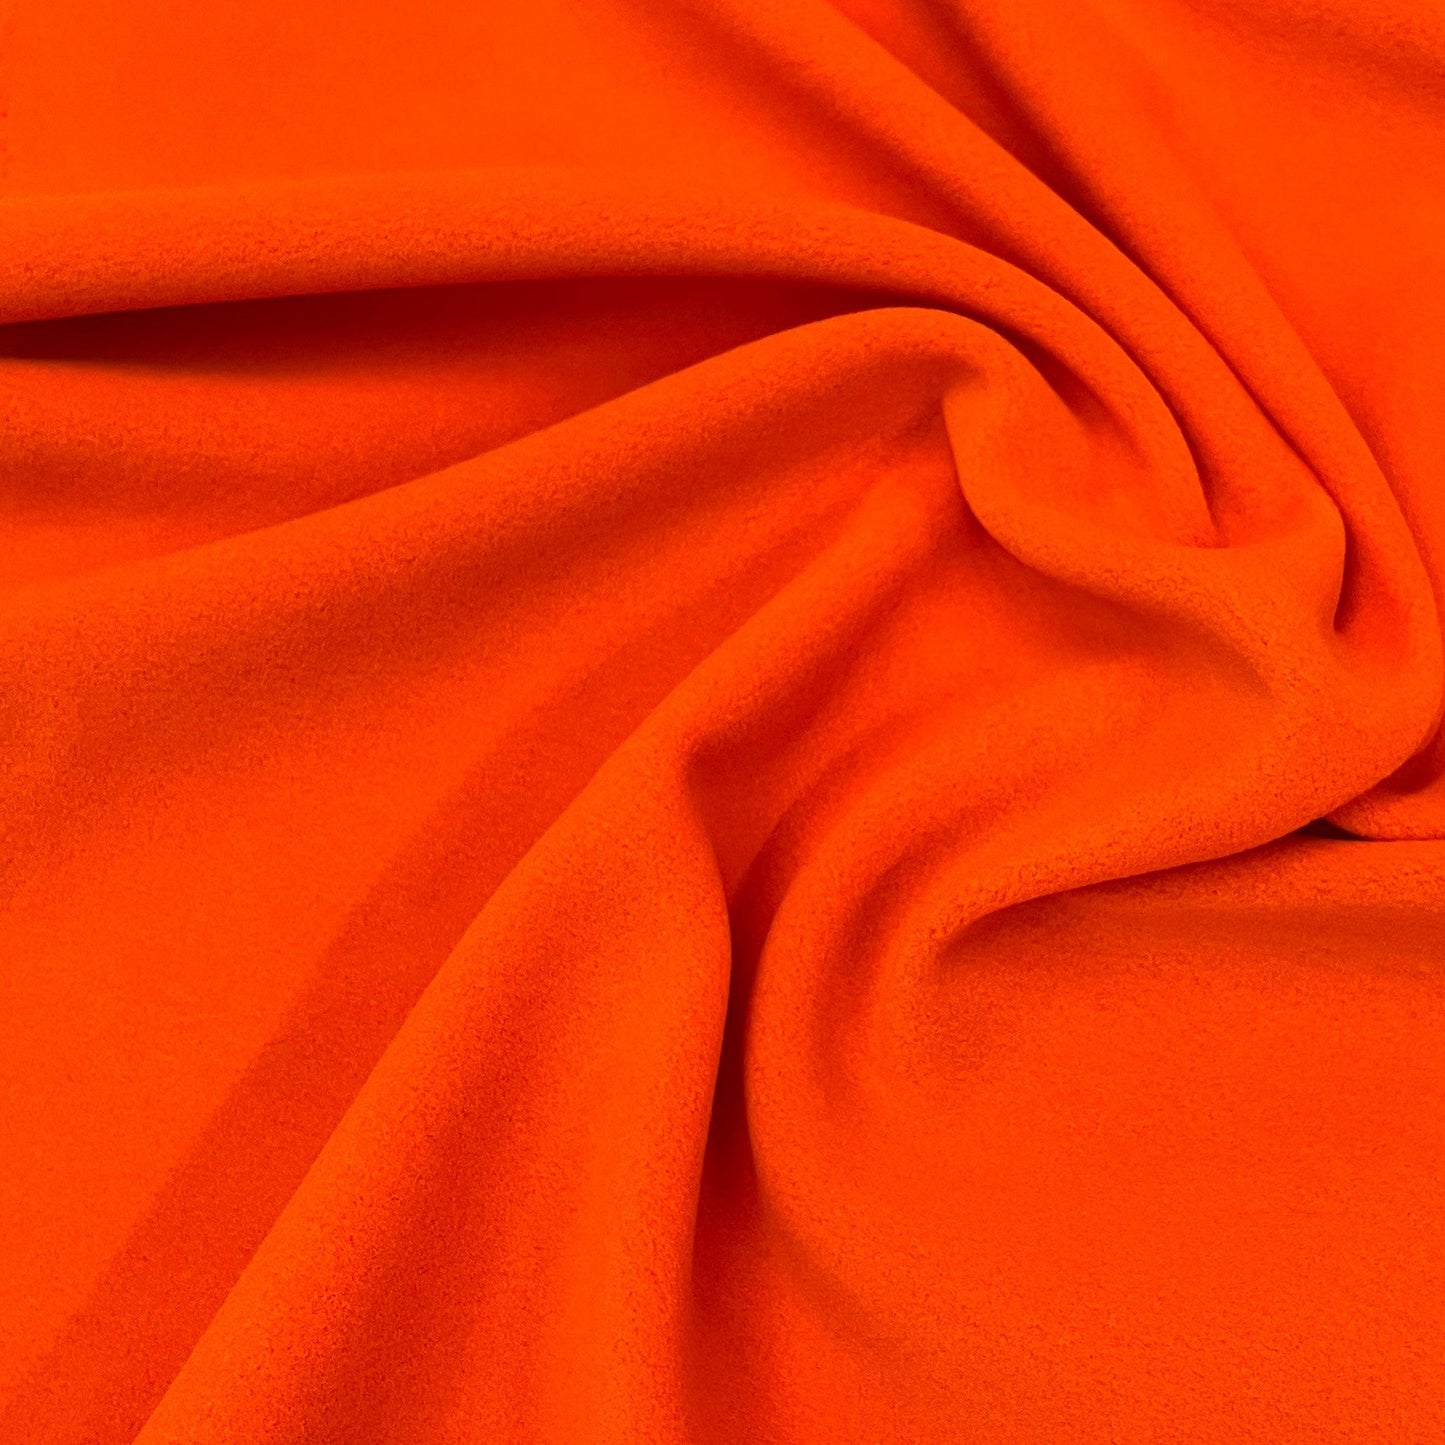 Orange Tango 9509 Polartec Windpro Fabric - Nature's Fabrics